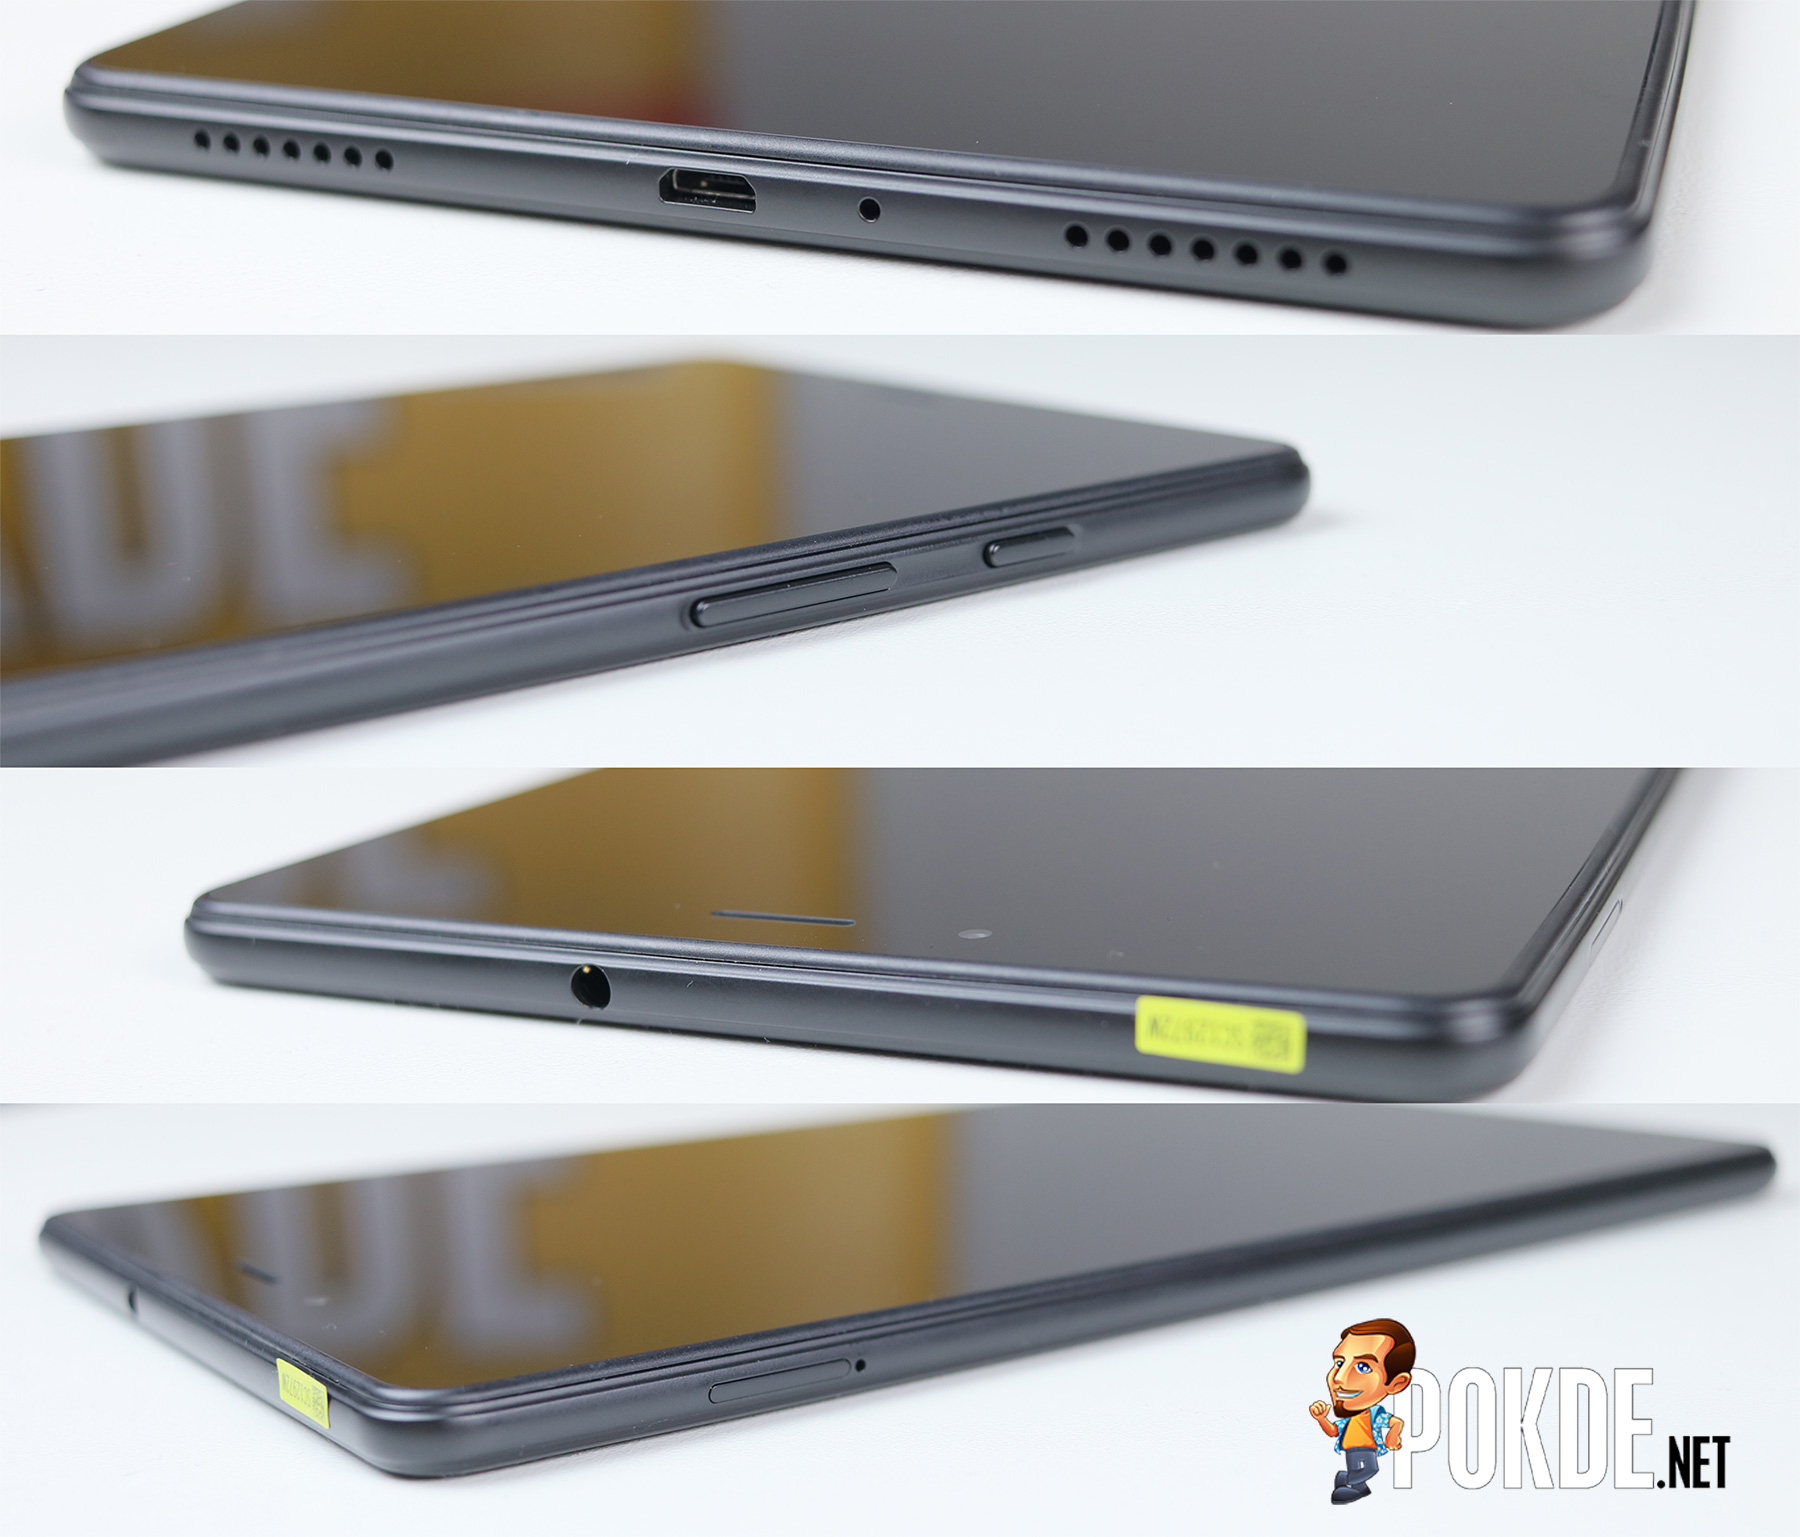  A-MIND For Samsung Galaxy Tab A 8.0 2019 T290 Wi-Fi